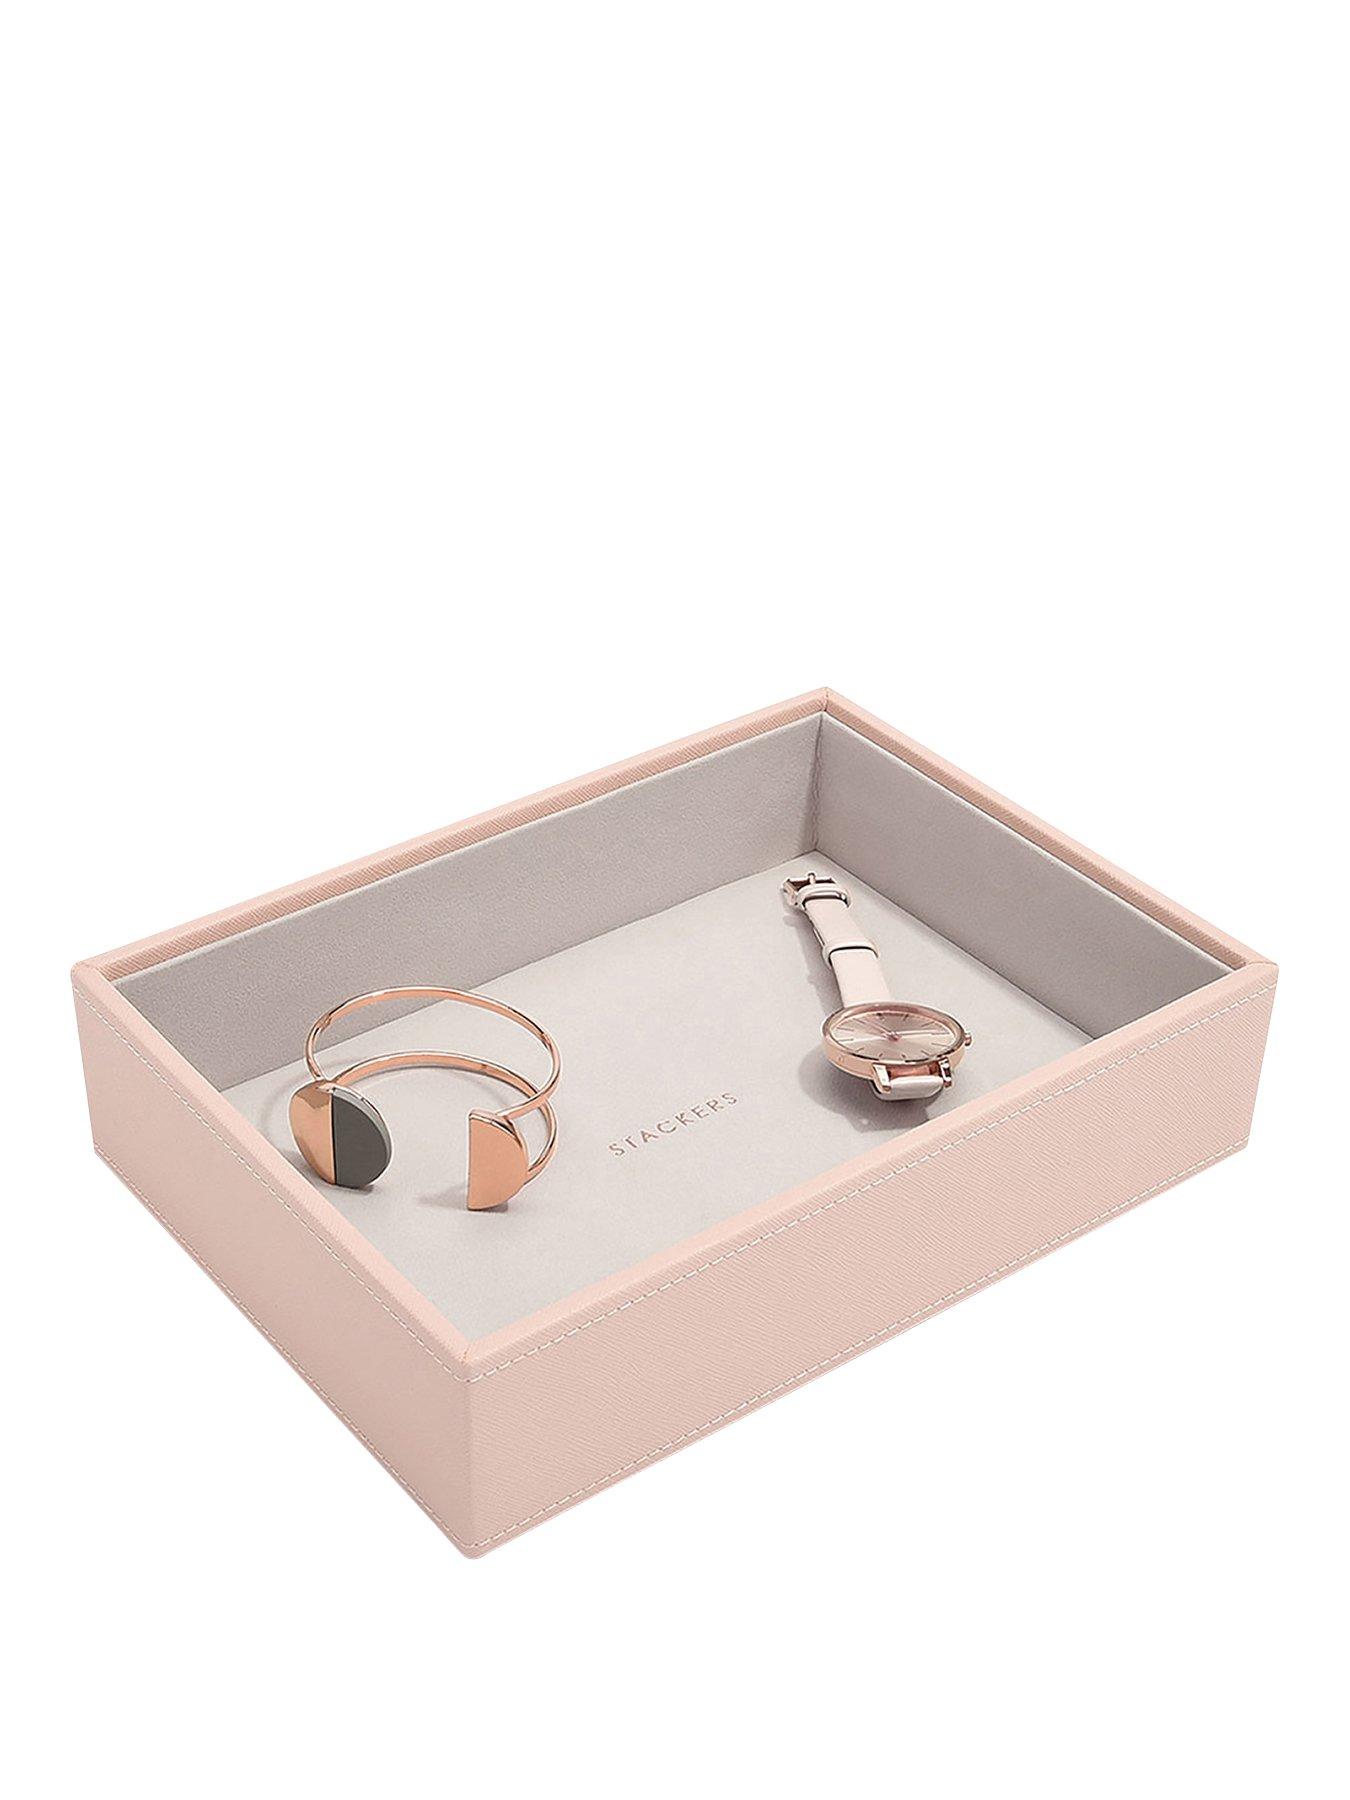 BULK Cardboard Jewelry Gift Boxes w/ Cotton Fill Padding - Gold Foil - 11  Sizes | eBay